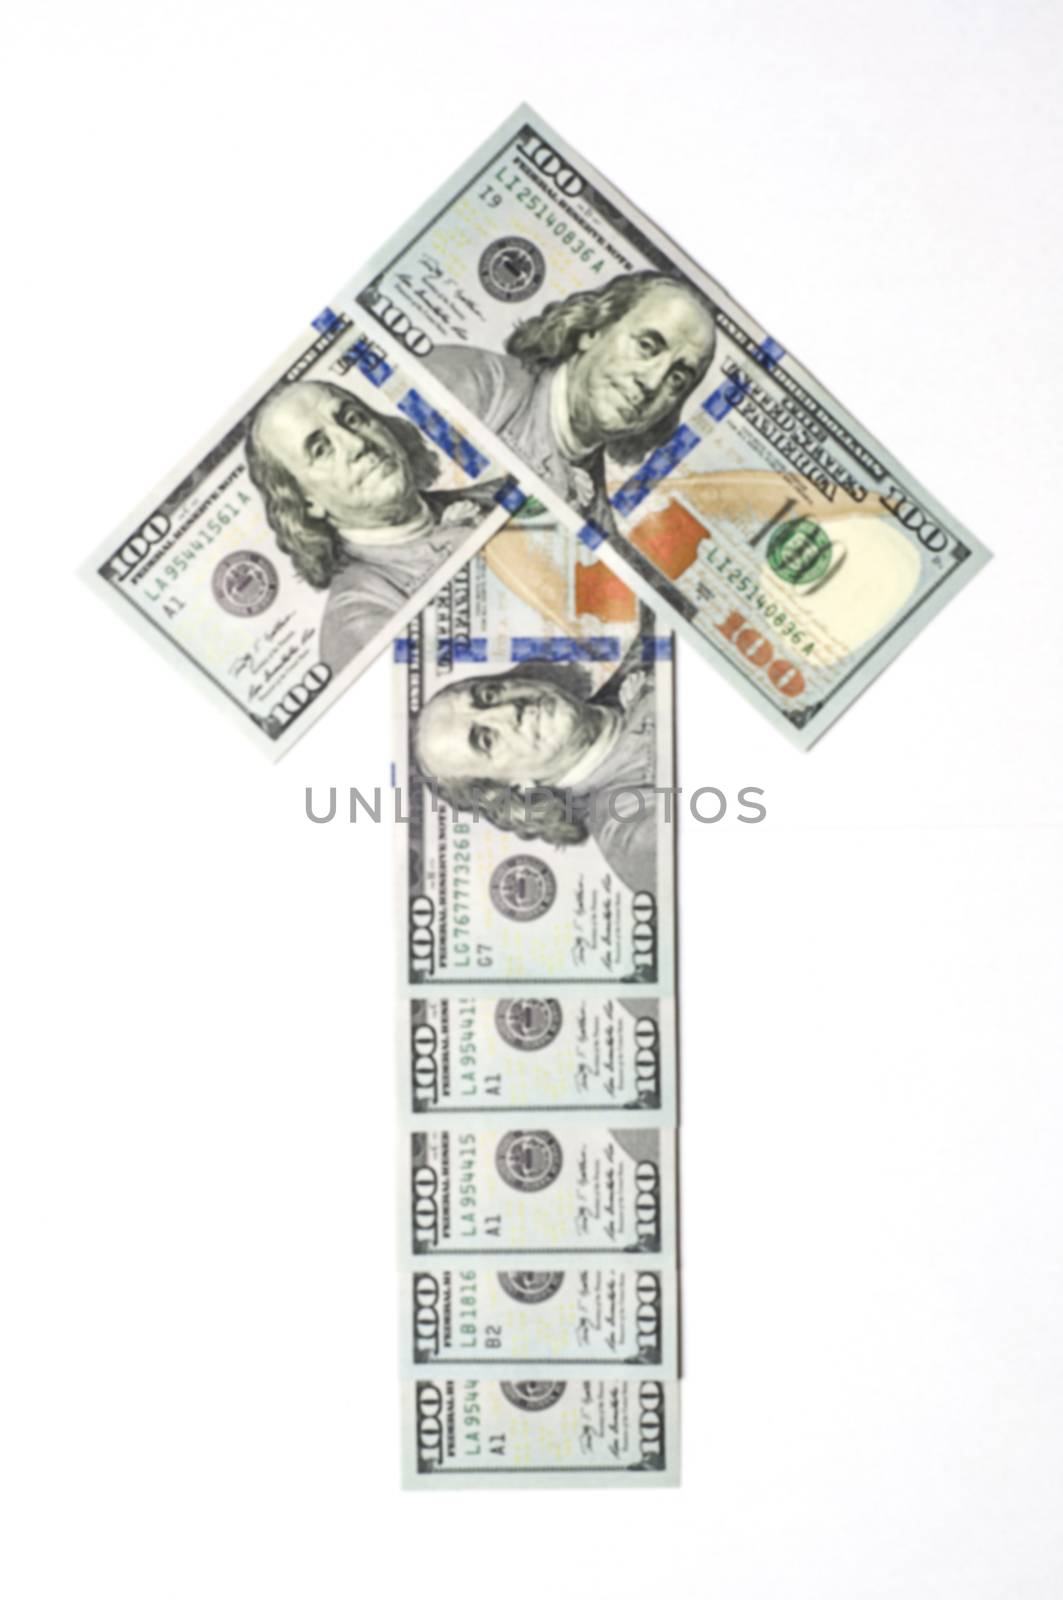 Arrow made of dollar bills by dred